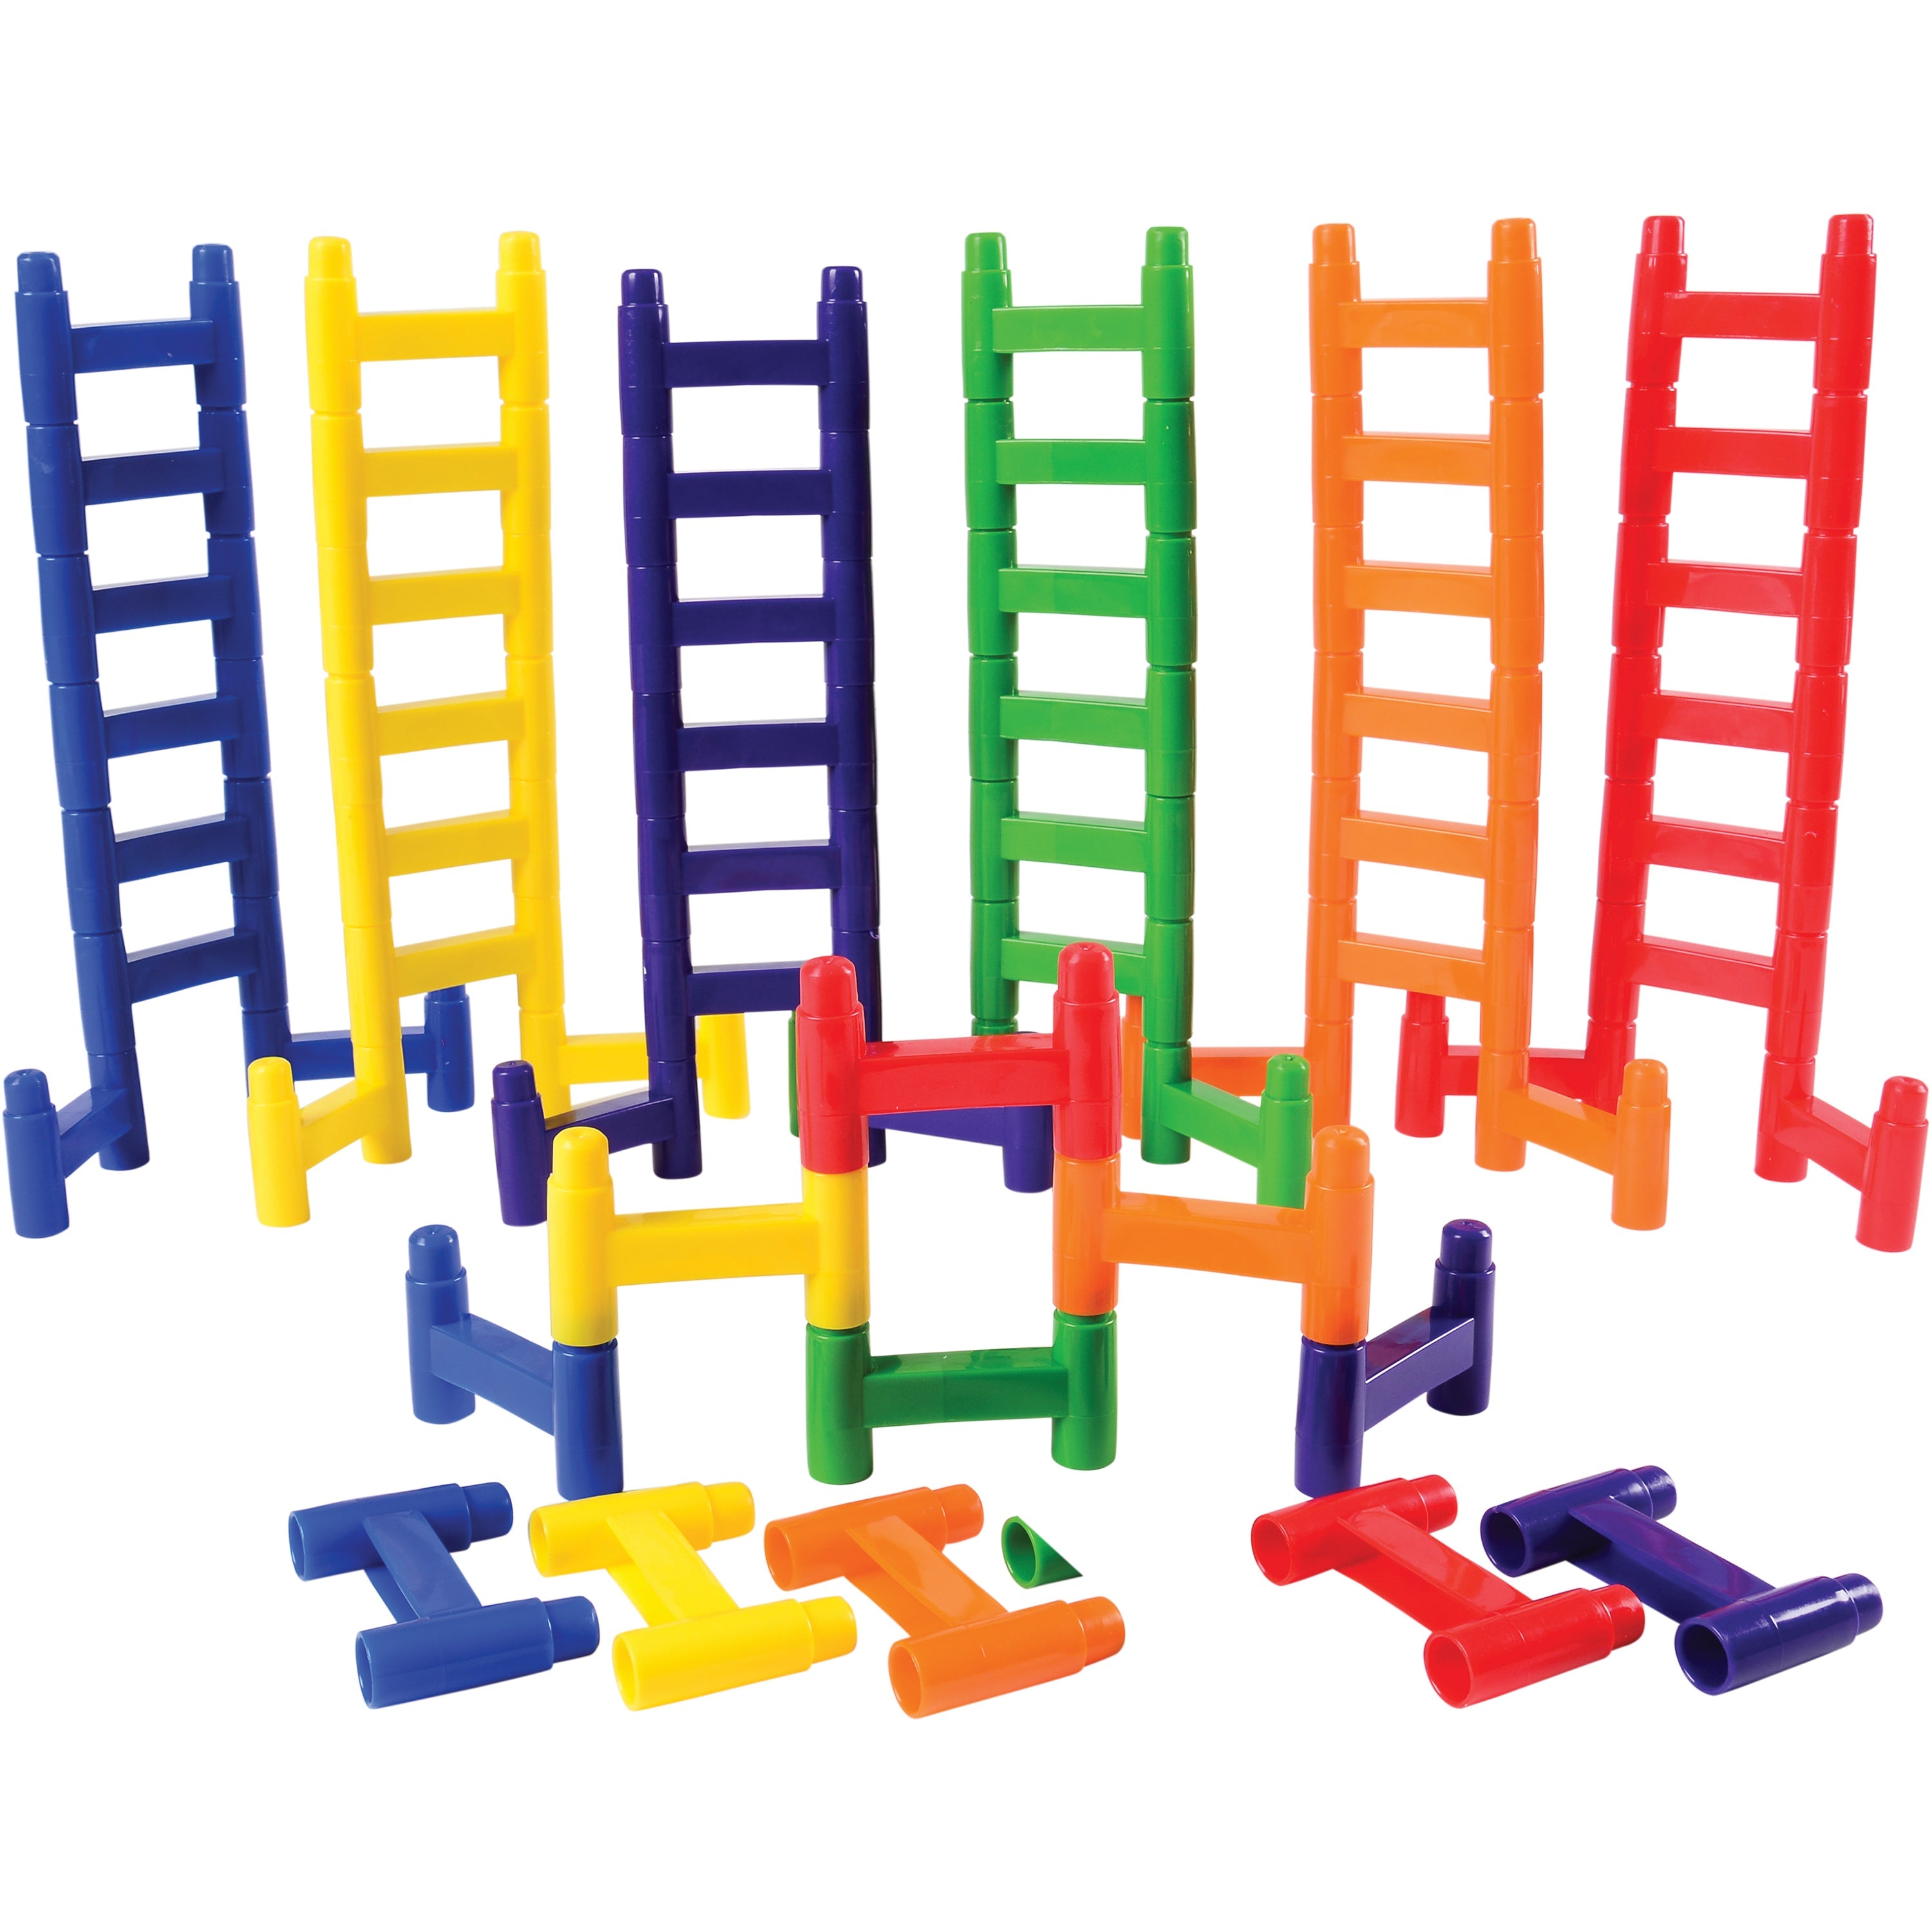 Ladder Links